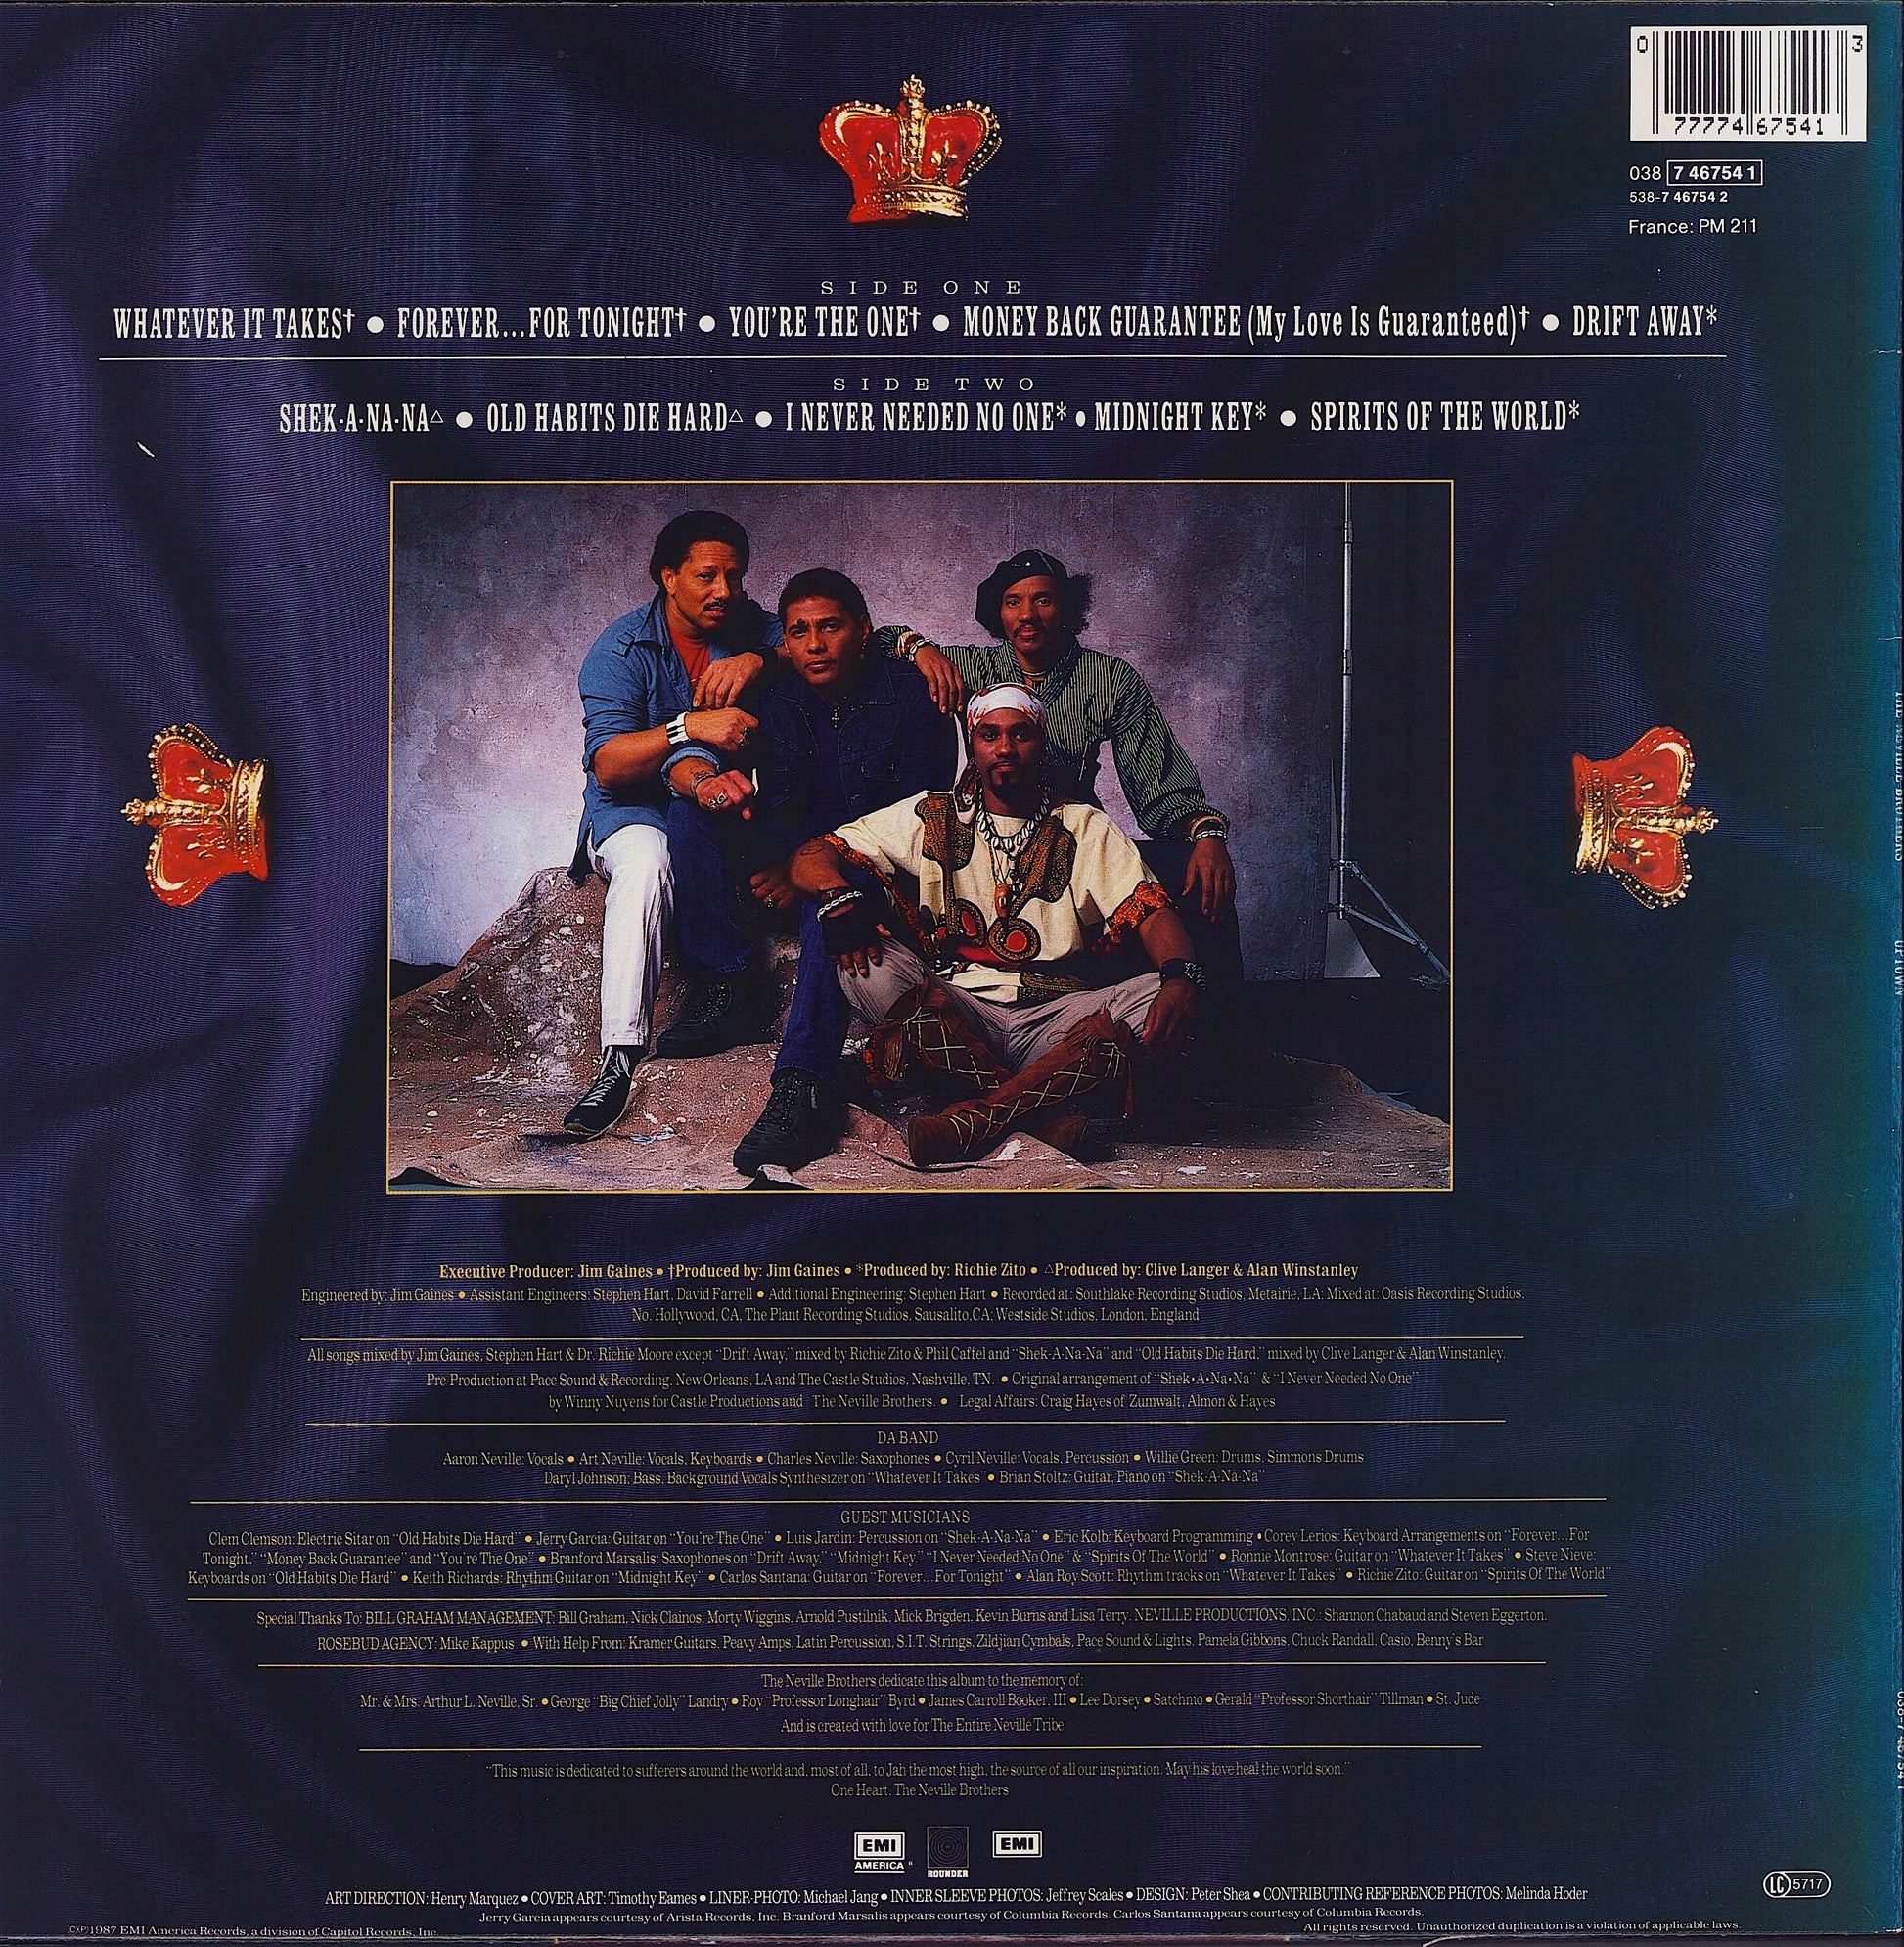 The Neville Brothers - Uptown Vinyl LP